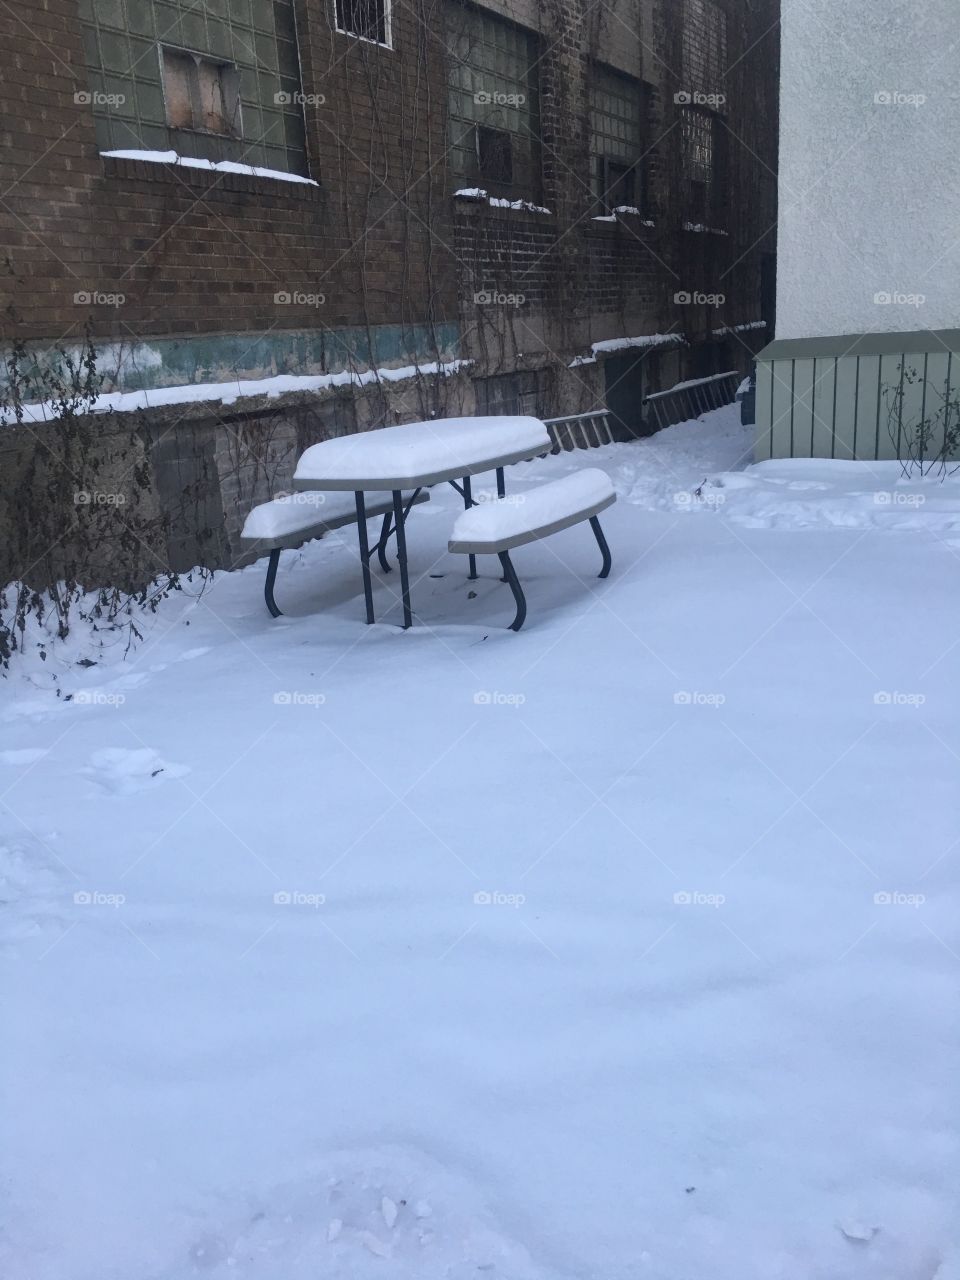 Snow in Minneapolis, MN Winter of 2016